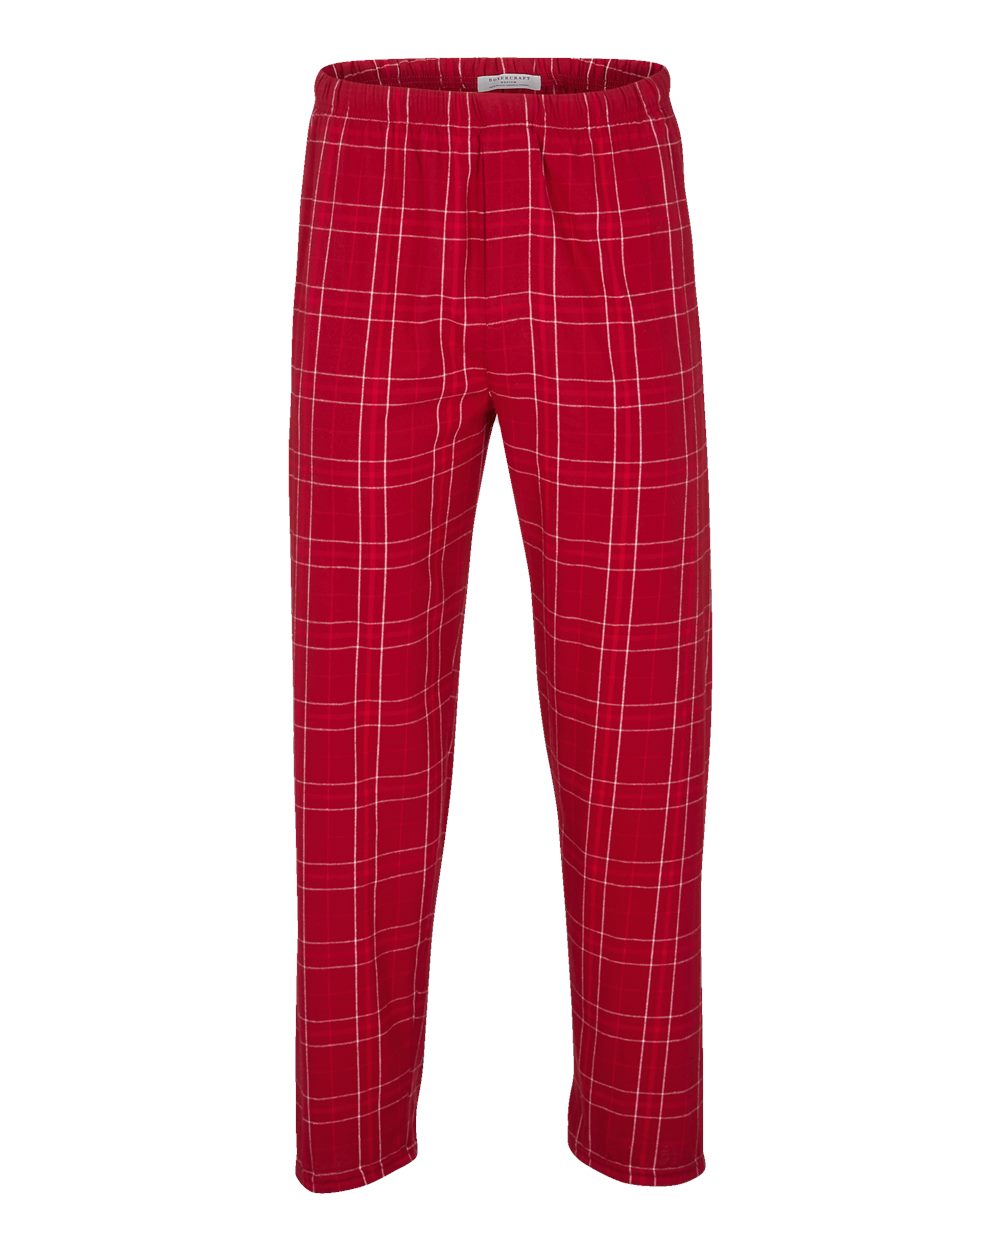 Boxercraft Unisex Flannel Pants Crimson Field Day Plaid Flannel Pants with Custom Text